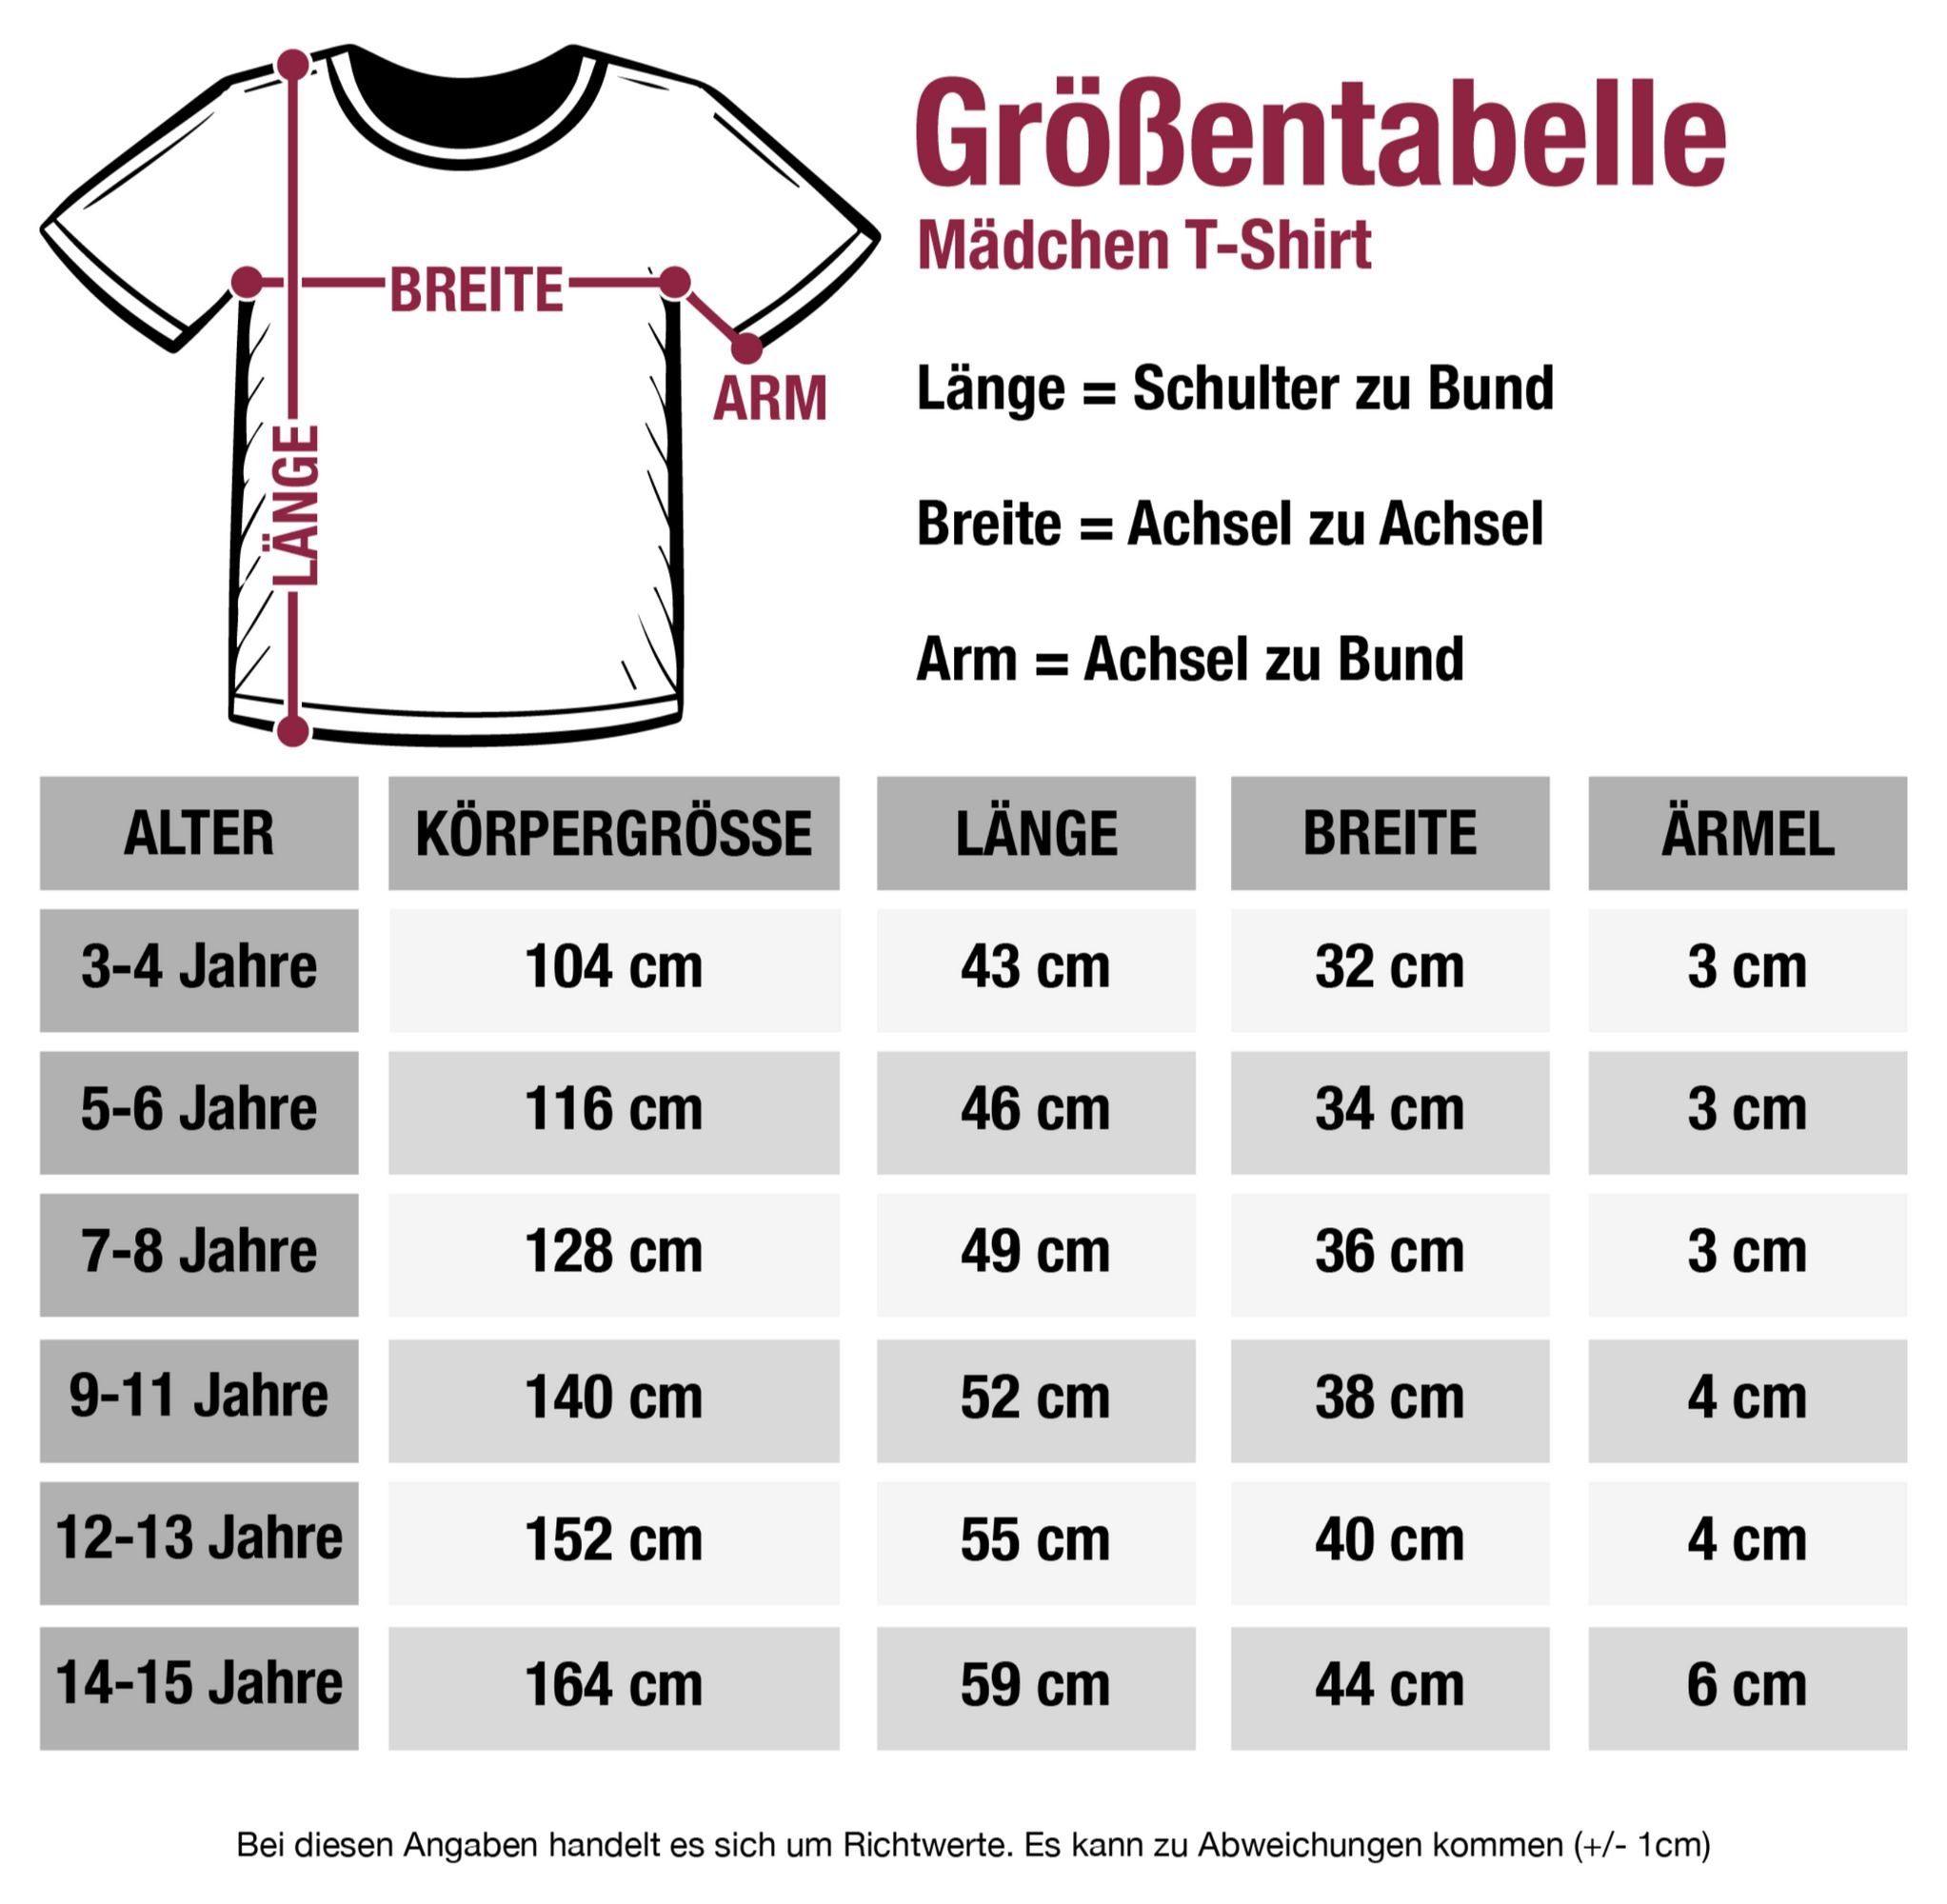 2 Sport Shirtracer - ruft schwarz Berg T-Shirt Rosa Kinder Der Kleidung